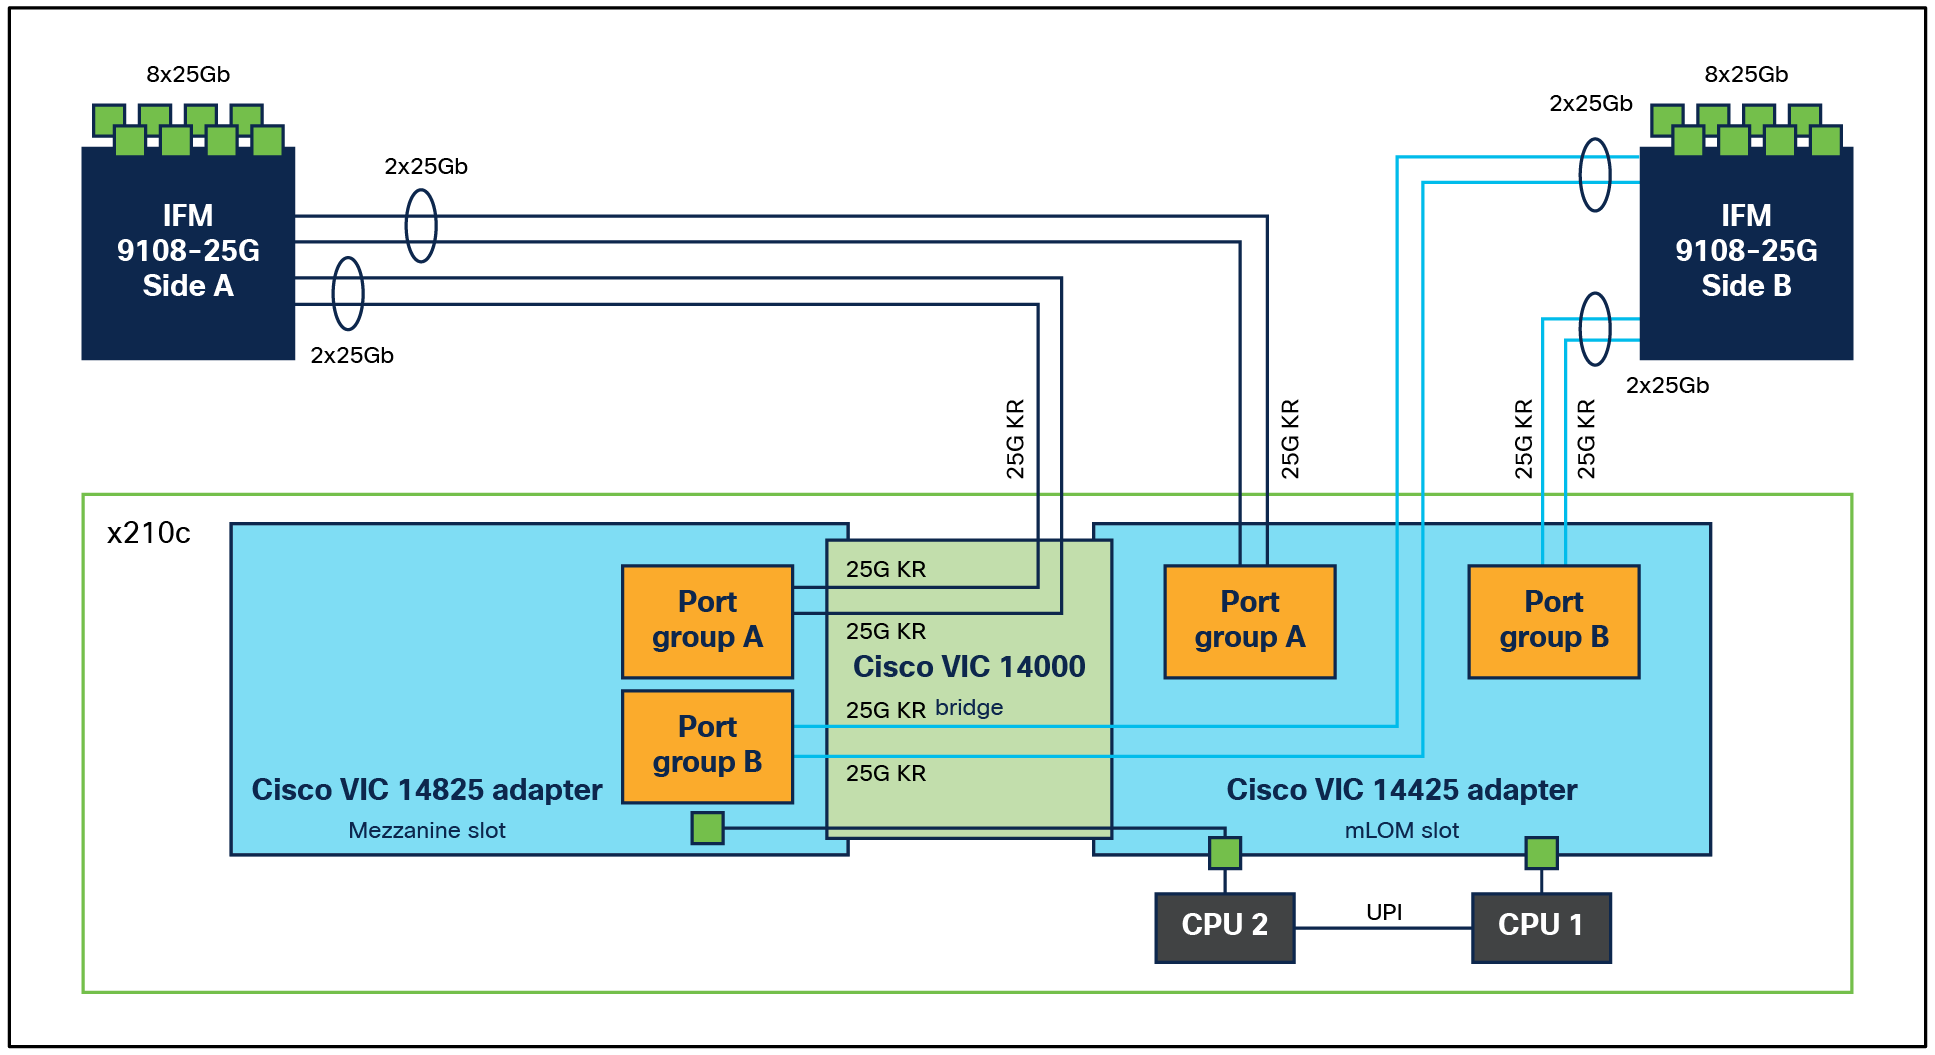 Cisco UCS VIC 14425 and 14825 in Cisco UCS X210c M6 Compute Node